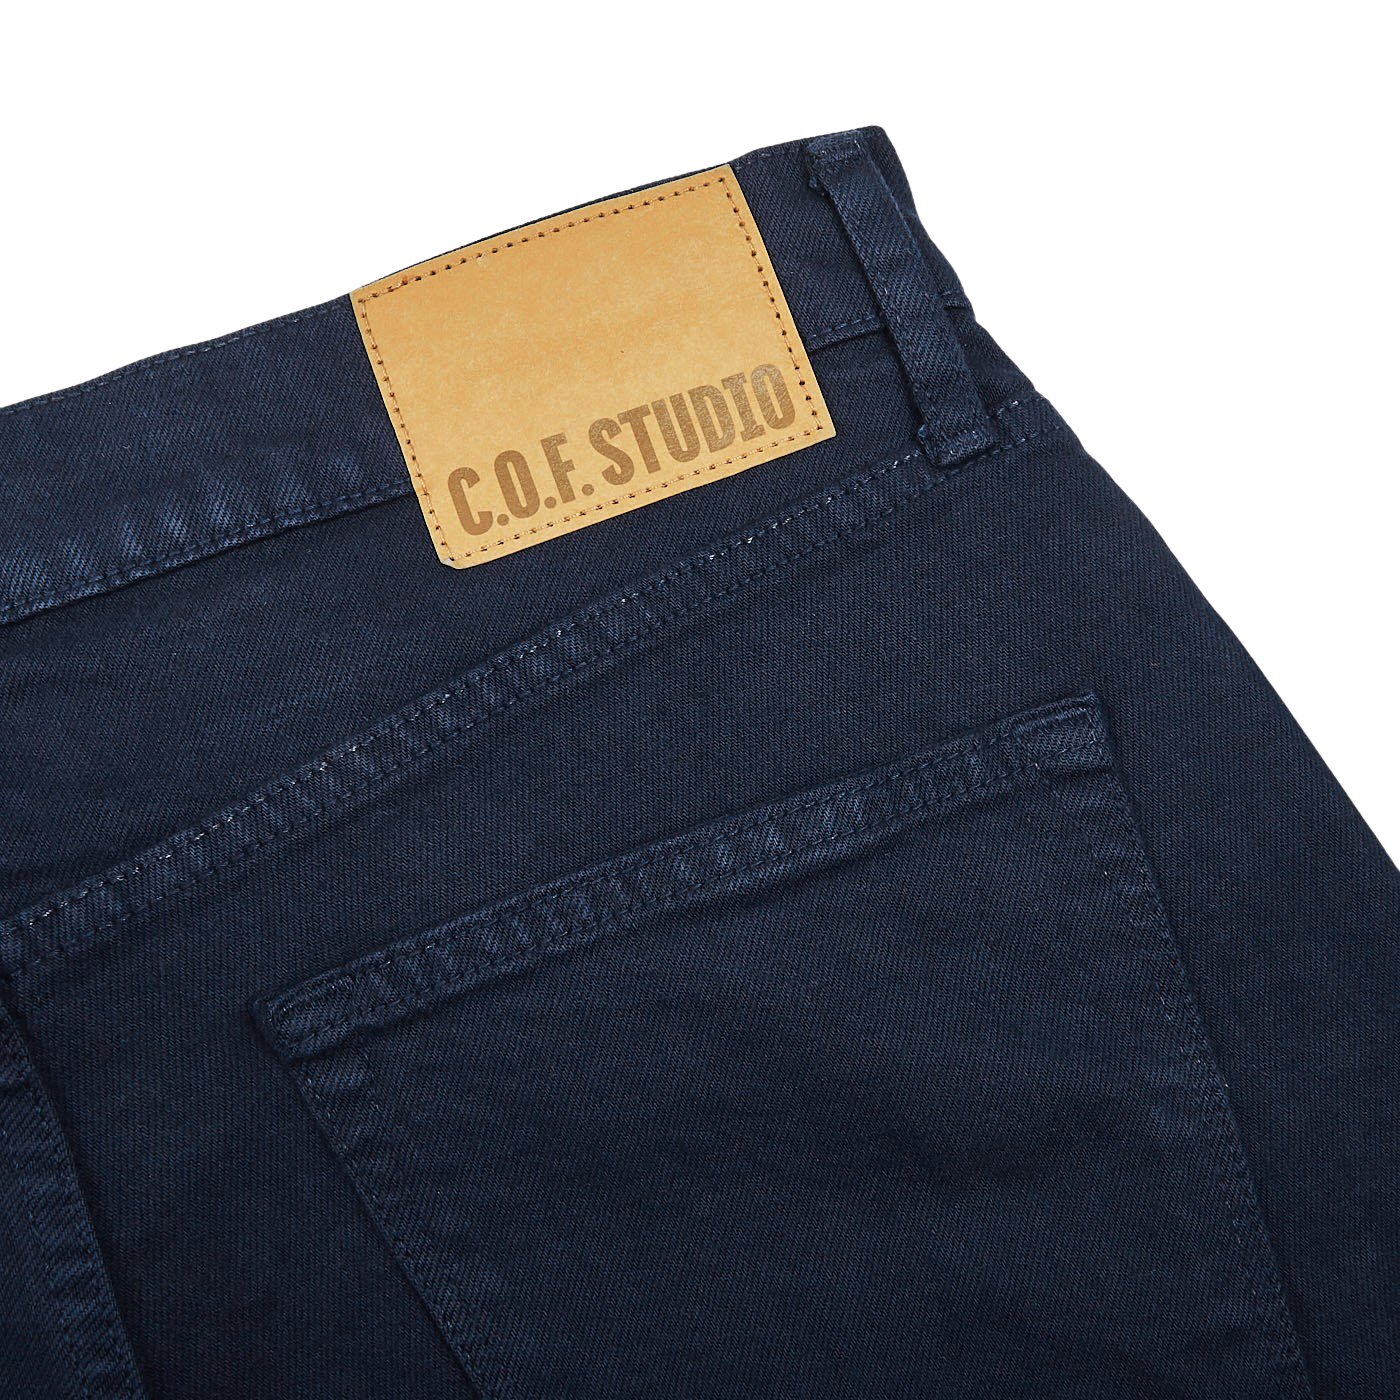 C.O.F Studio Navy Blue Candiani Cotton M7 Jeans Pocket